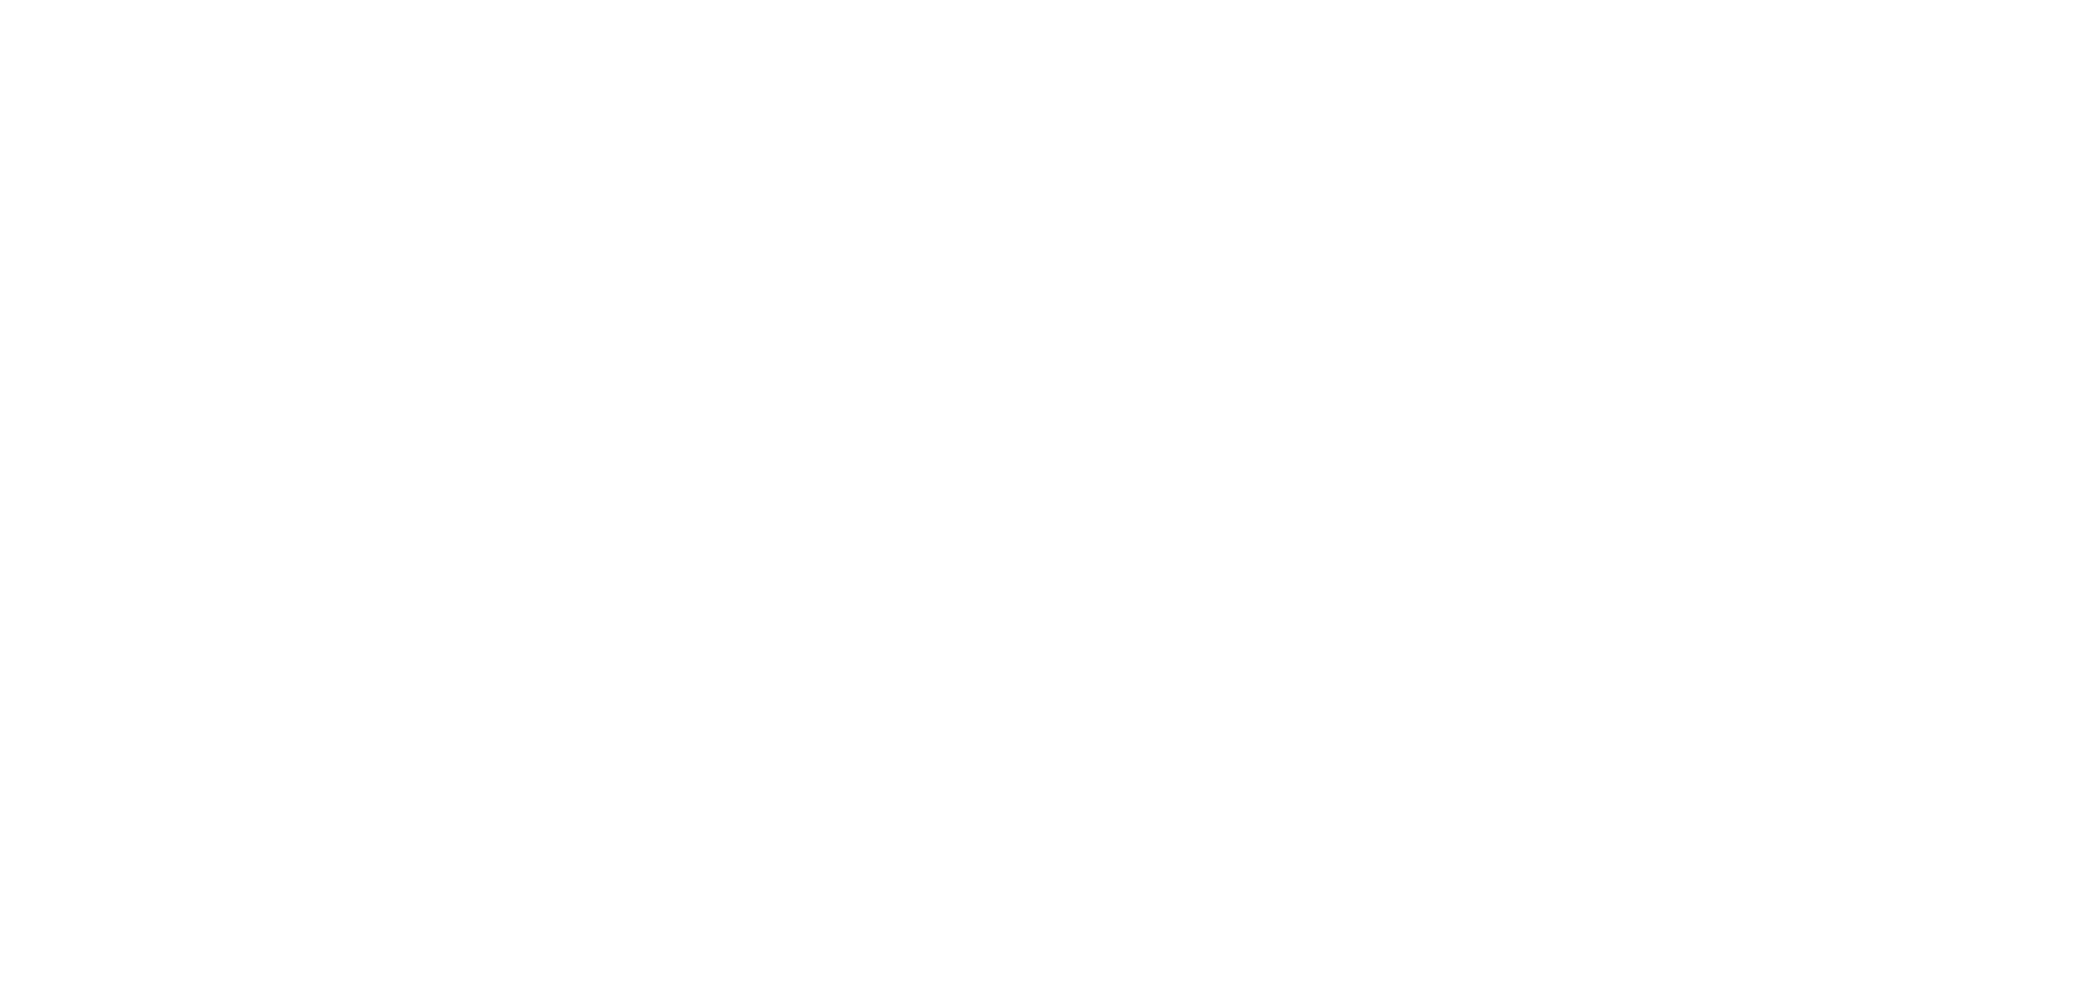 The High Culture logo white